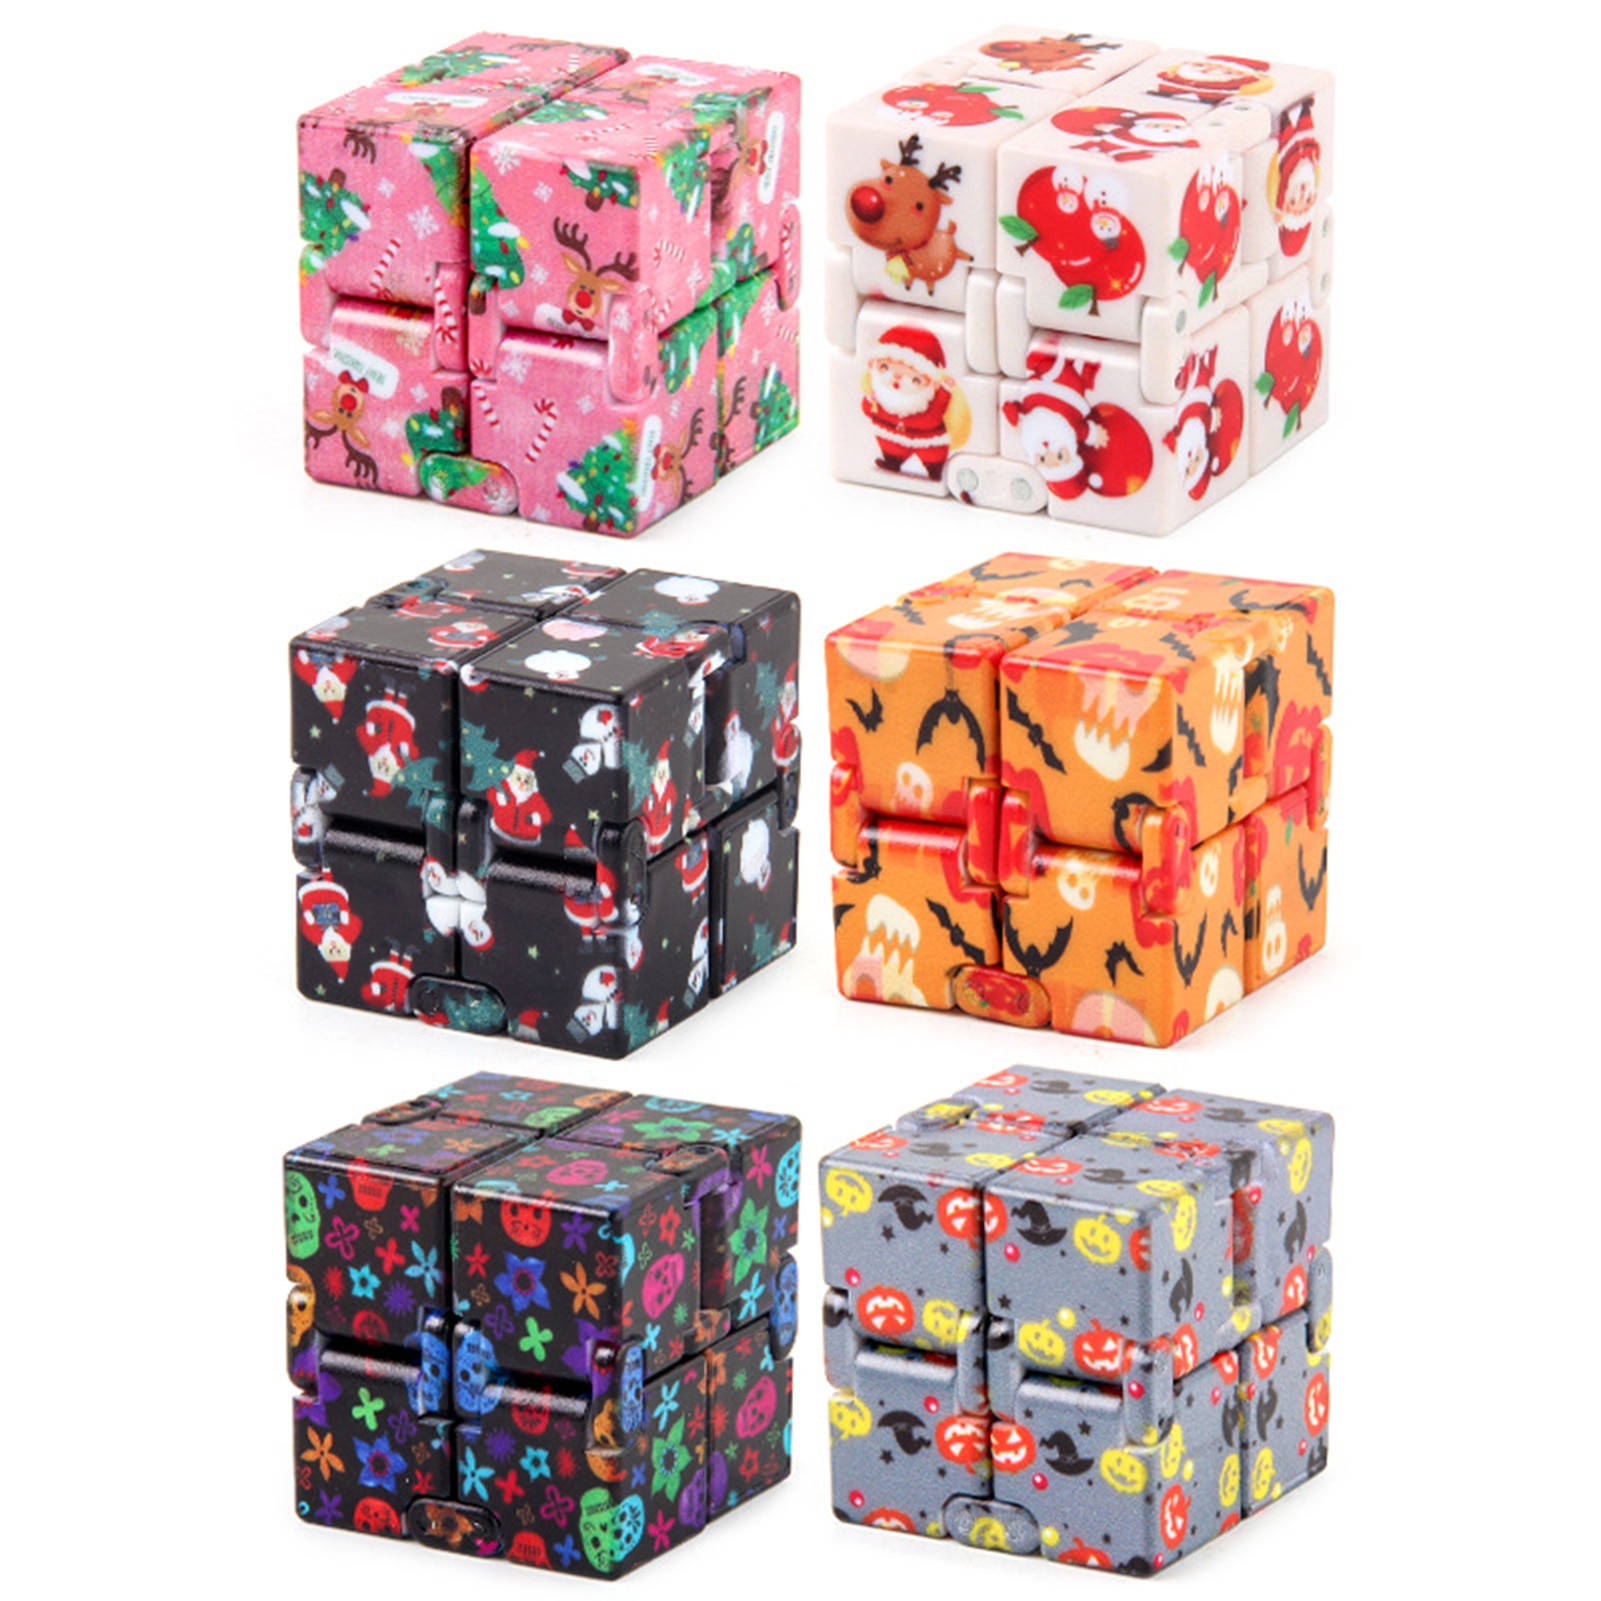 Creative Infinite Cube Anti stress Fidget Toys Infinity Cube Magic Cube Office Flip Cubic Puzzle Stop 1 - Simple Dimple Fidget